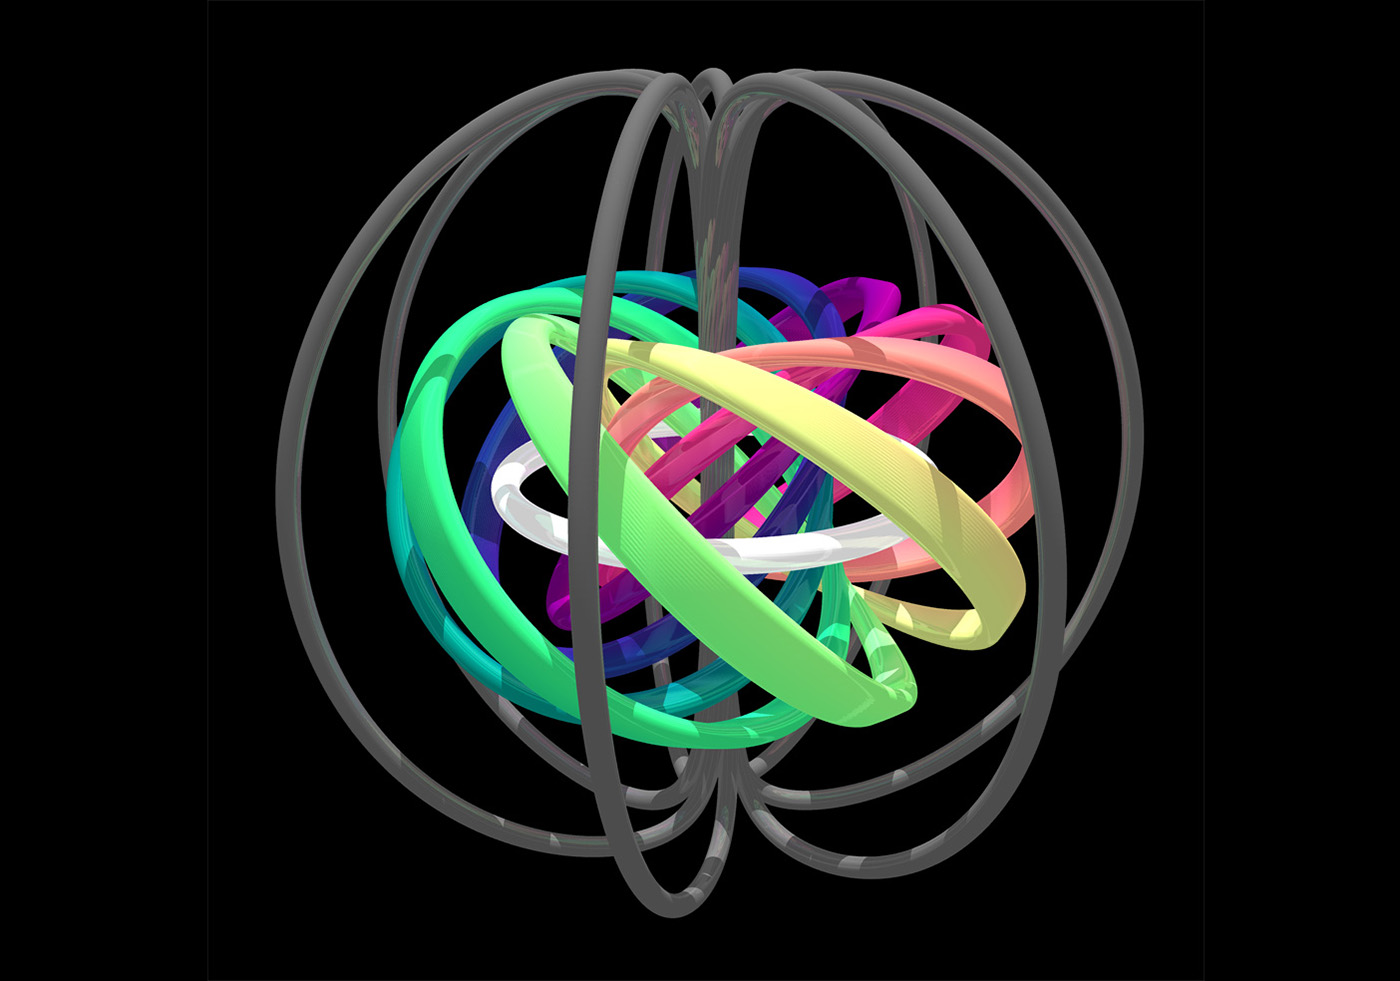 Scientists tie quantum materials into infinite knots